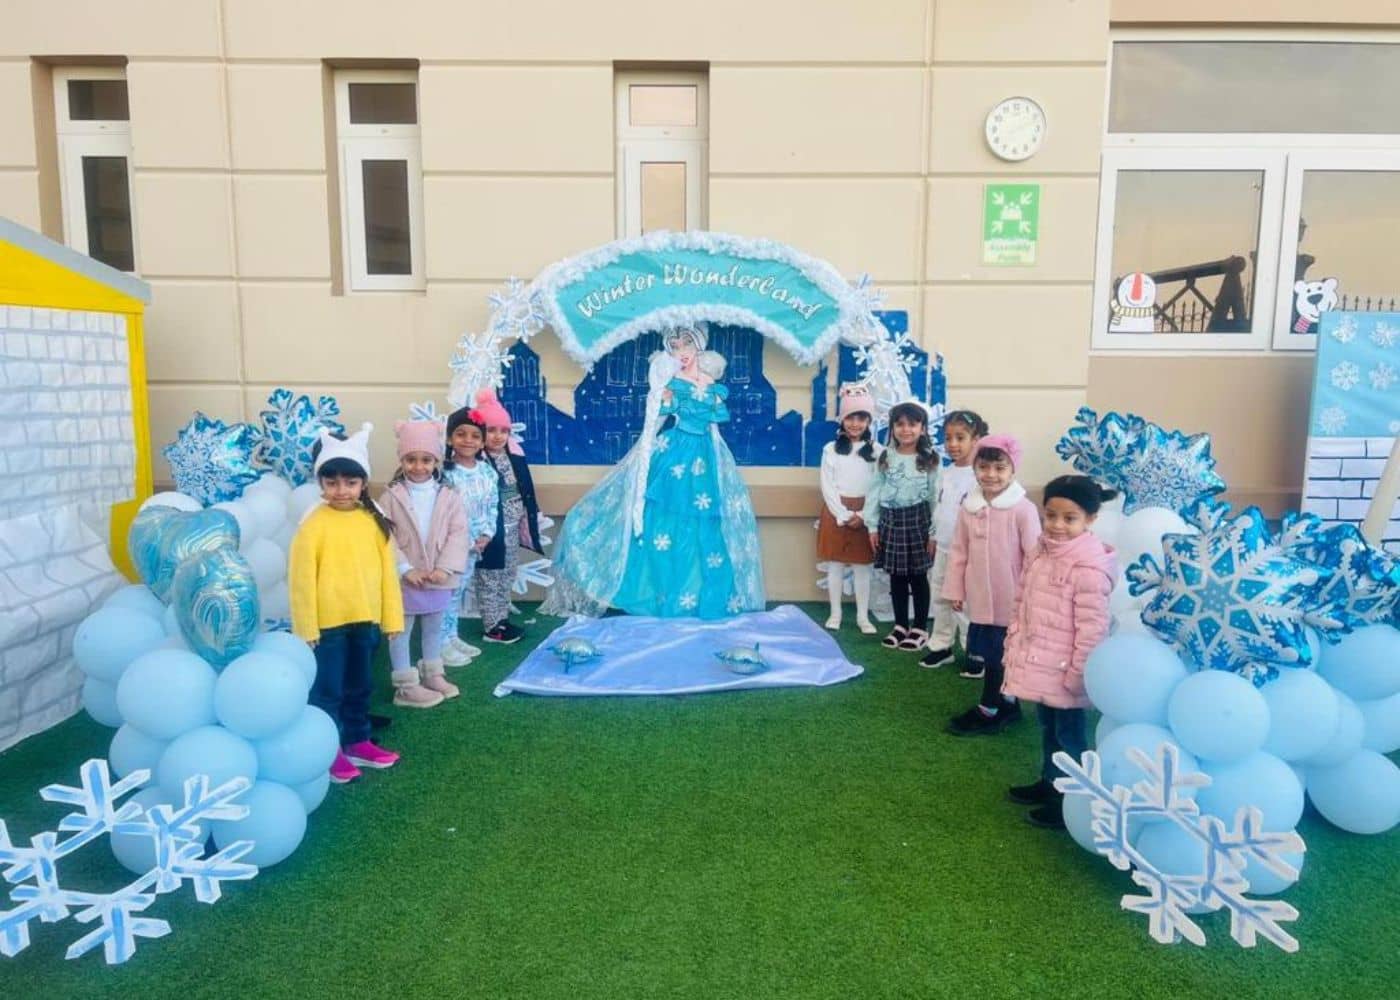 Students of Abu Dhabi International School at the Winter Wonderland event